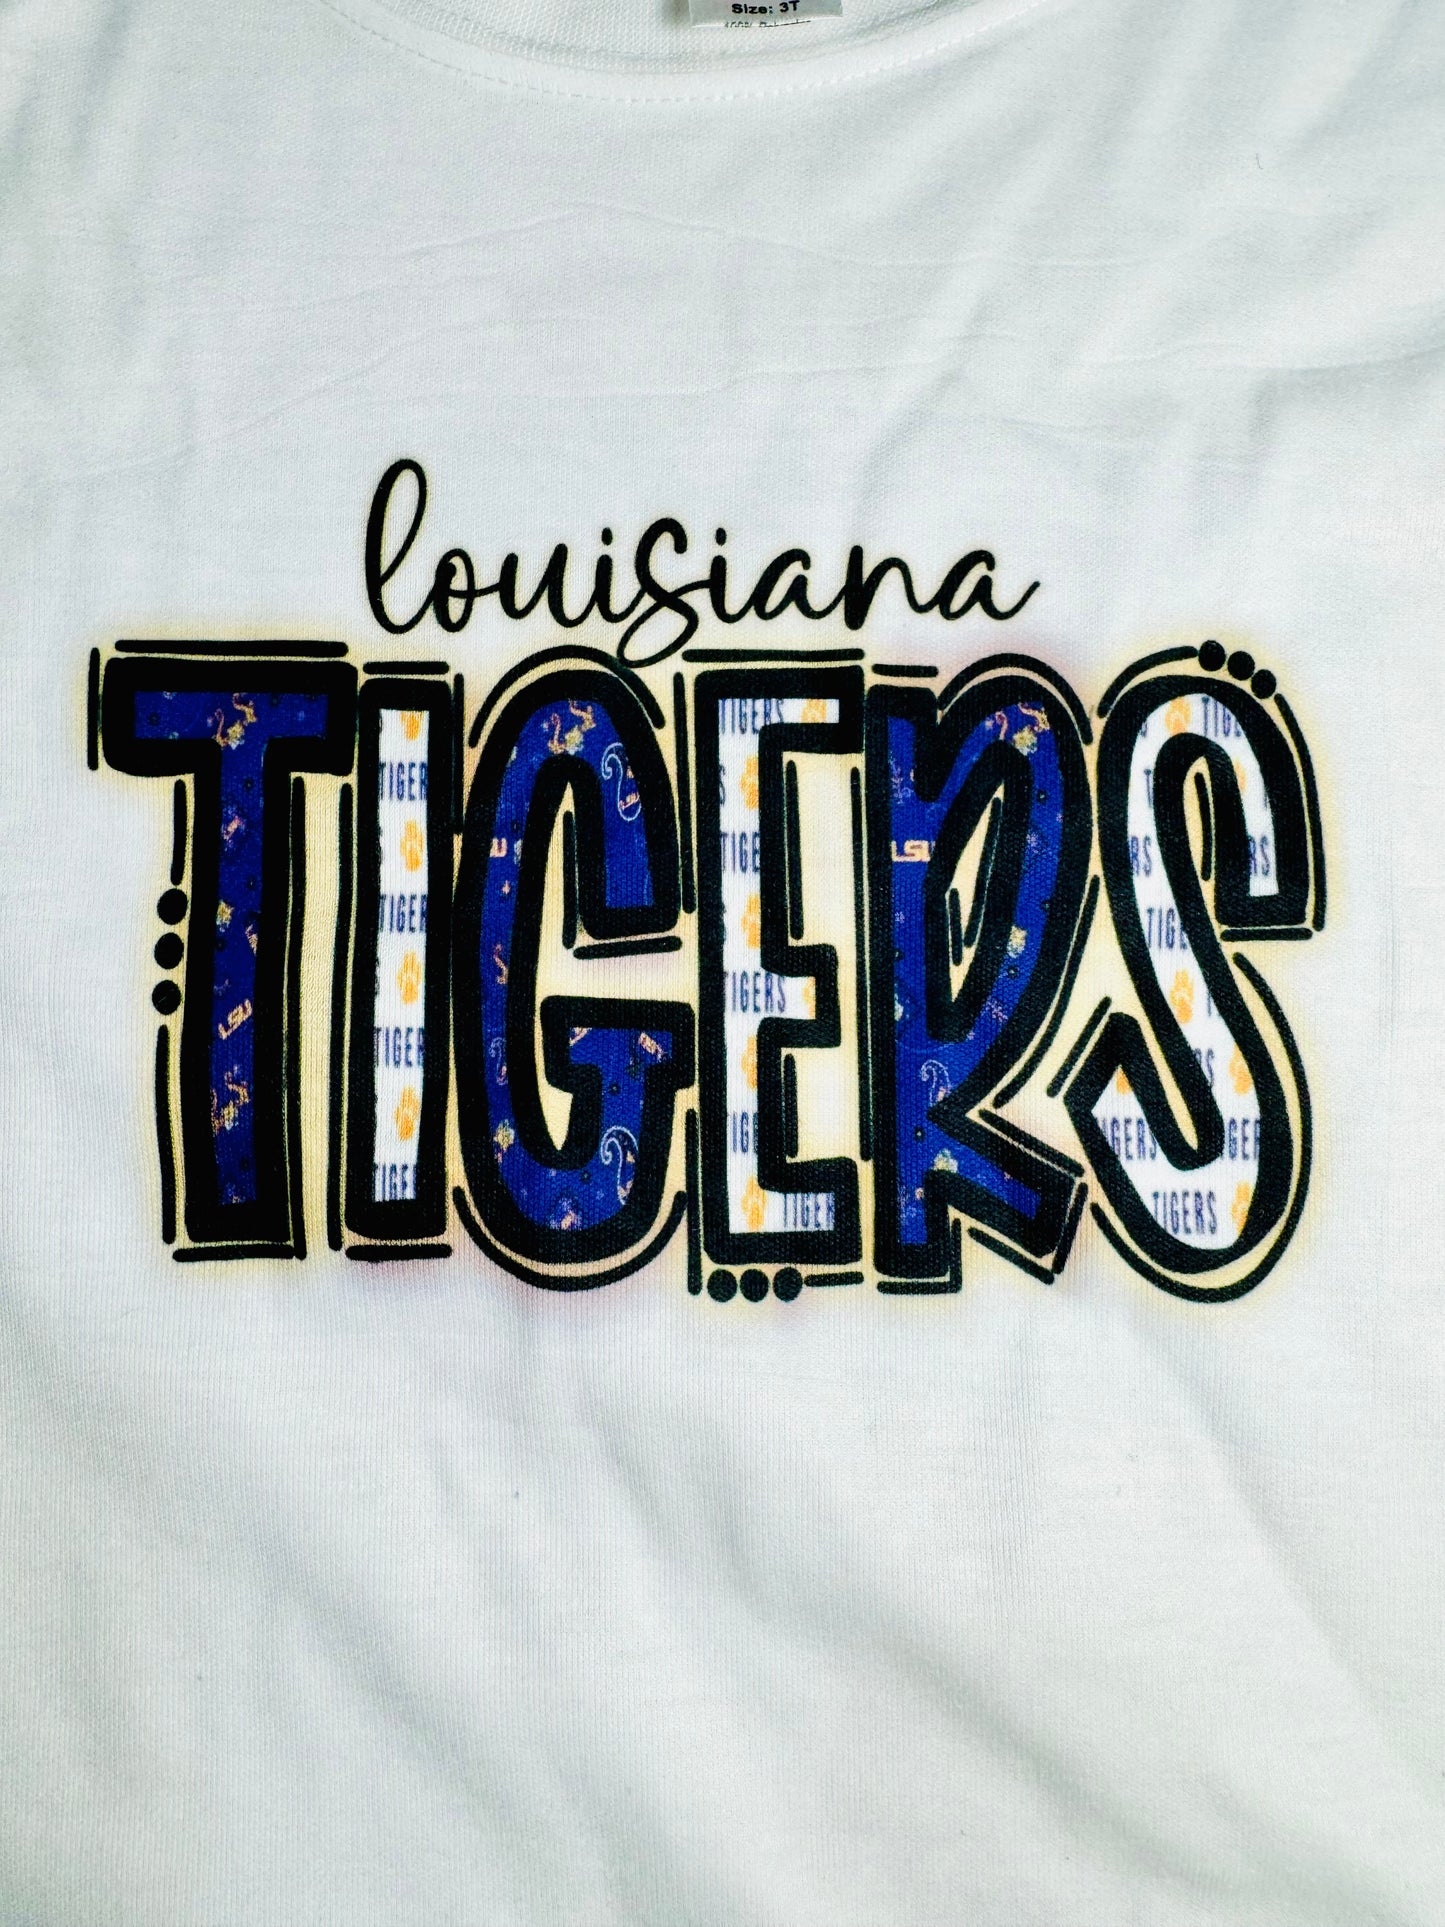 Louisiana Tigers Tee Shirt